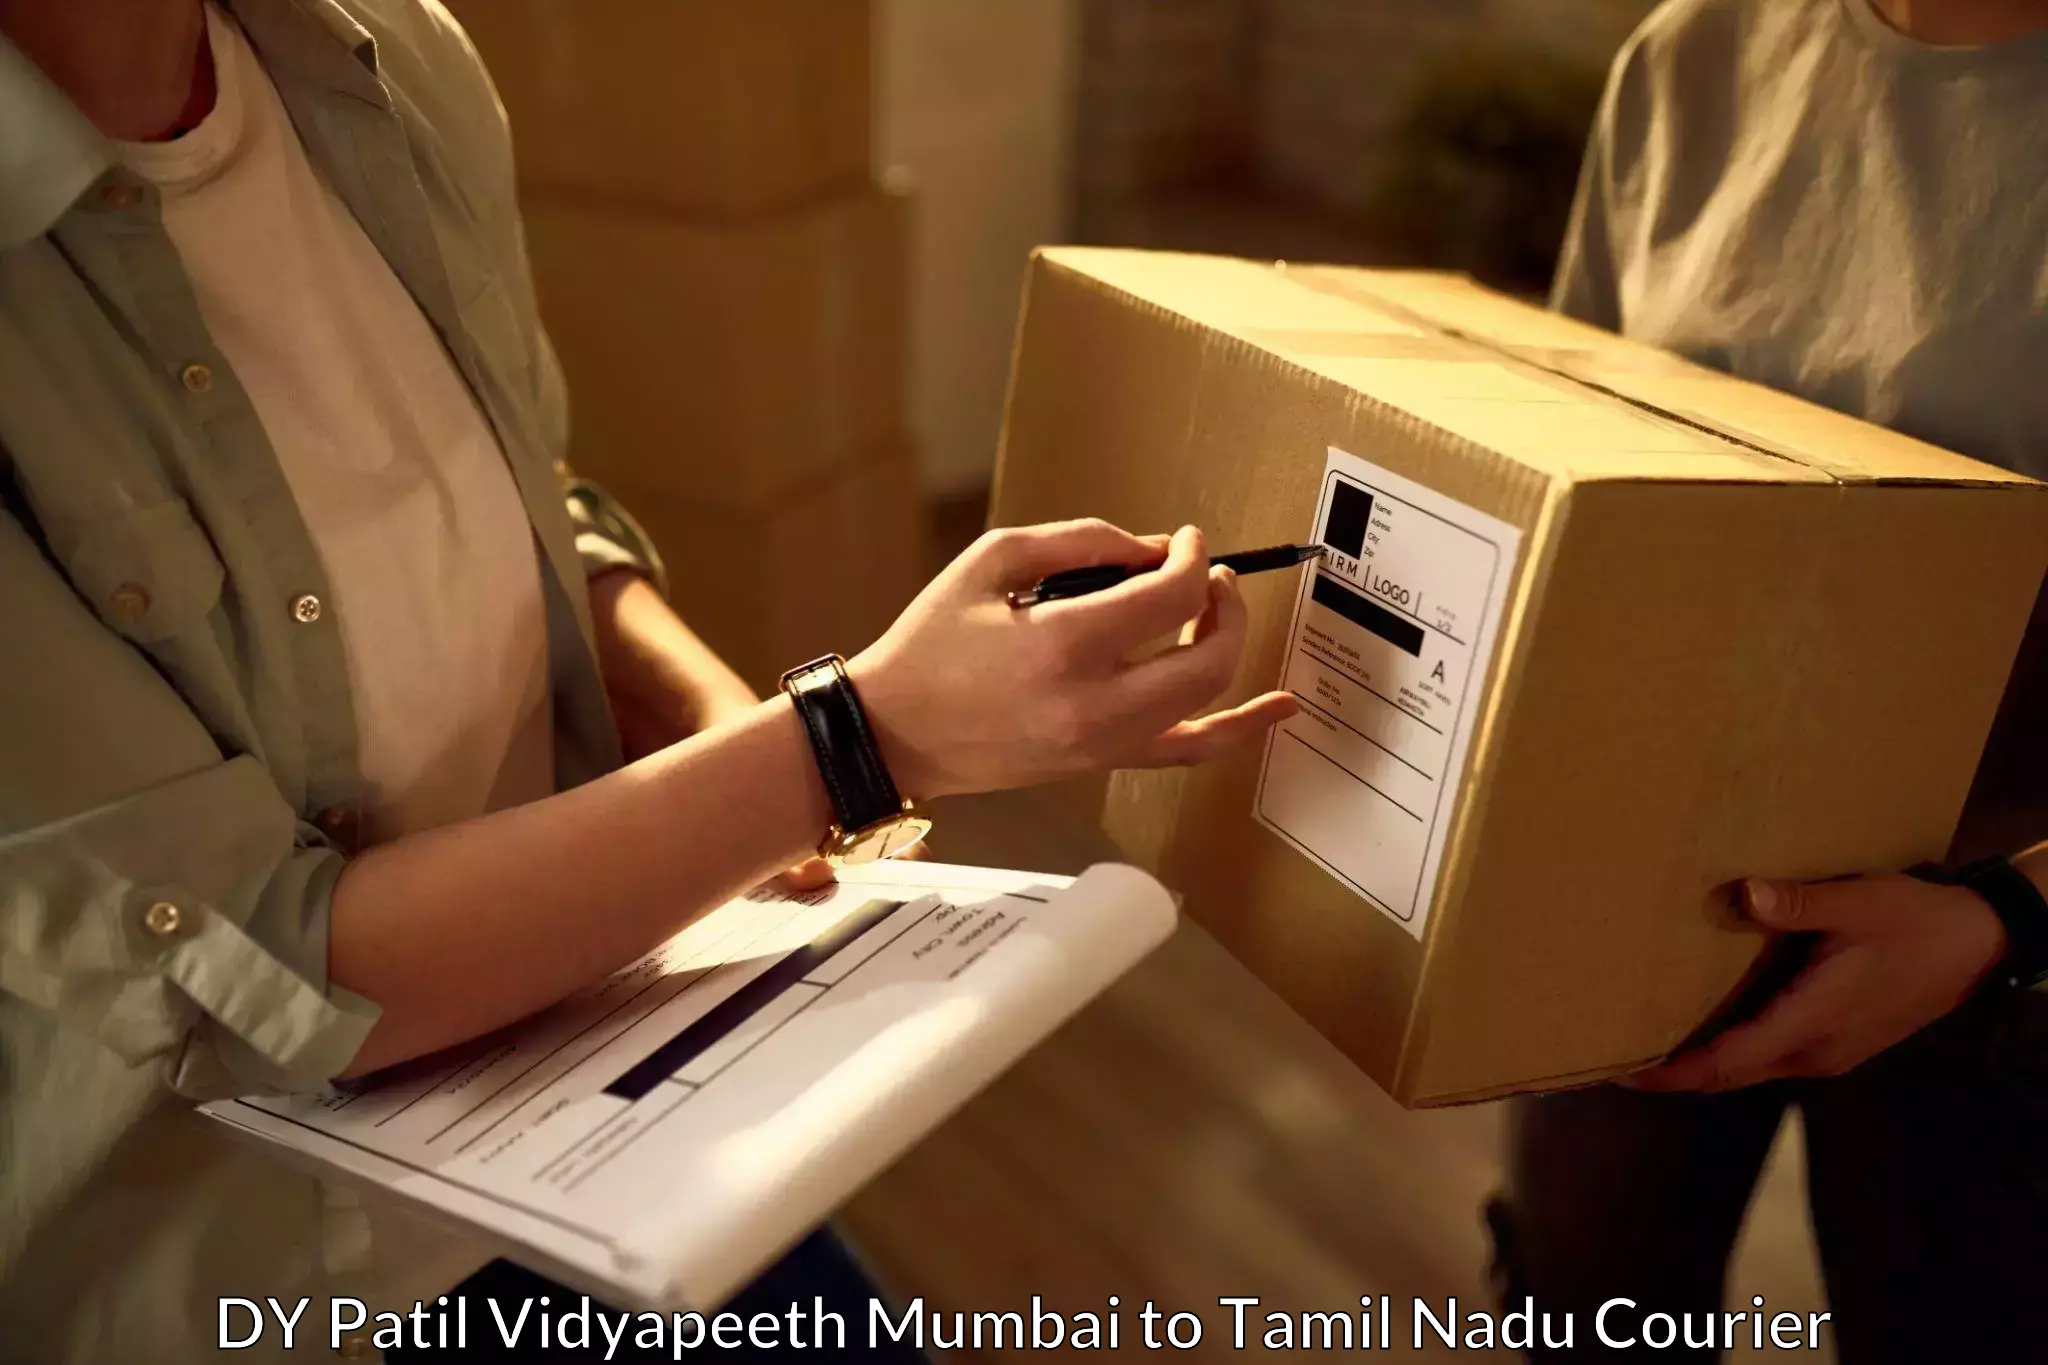 Cargo delivery service DY Patil Vidyapeeth Mumbai to Maharajapuram